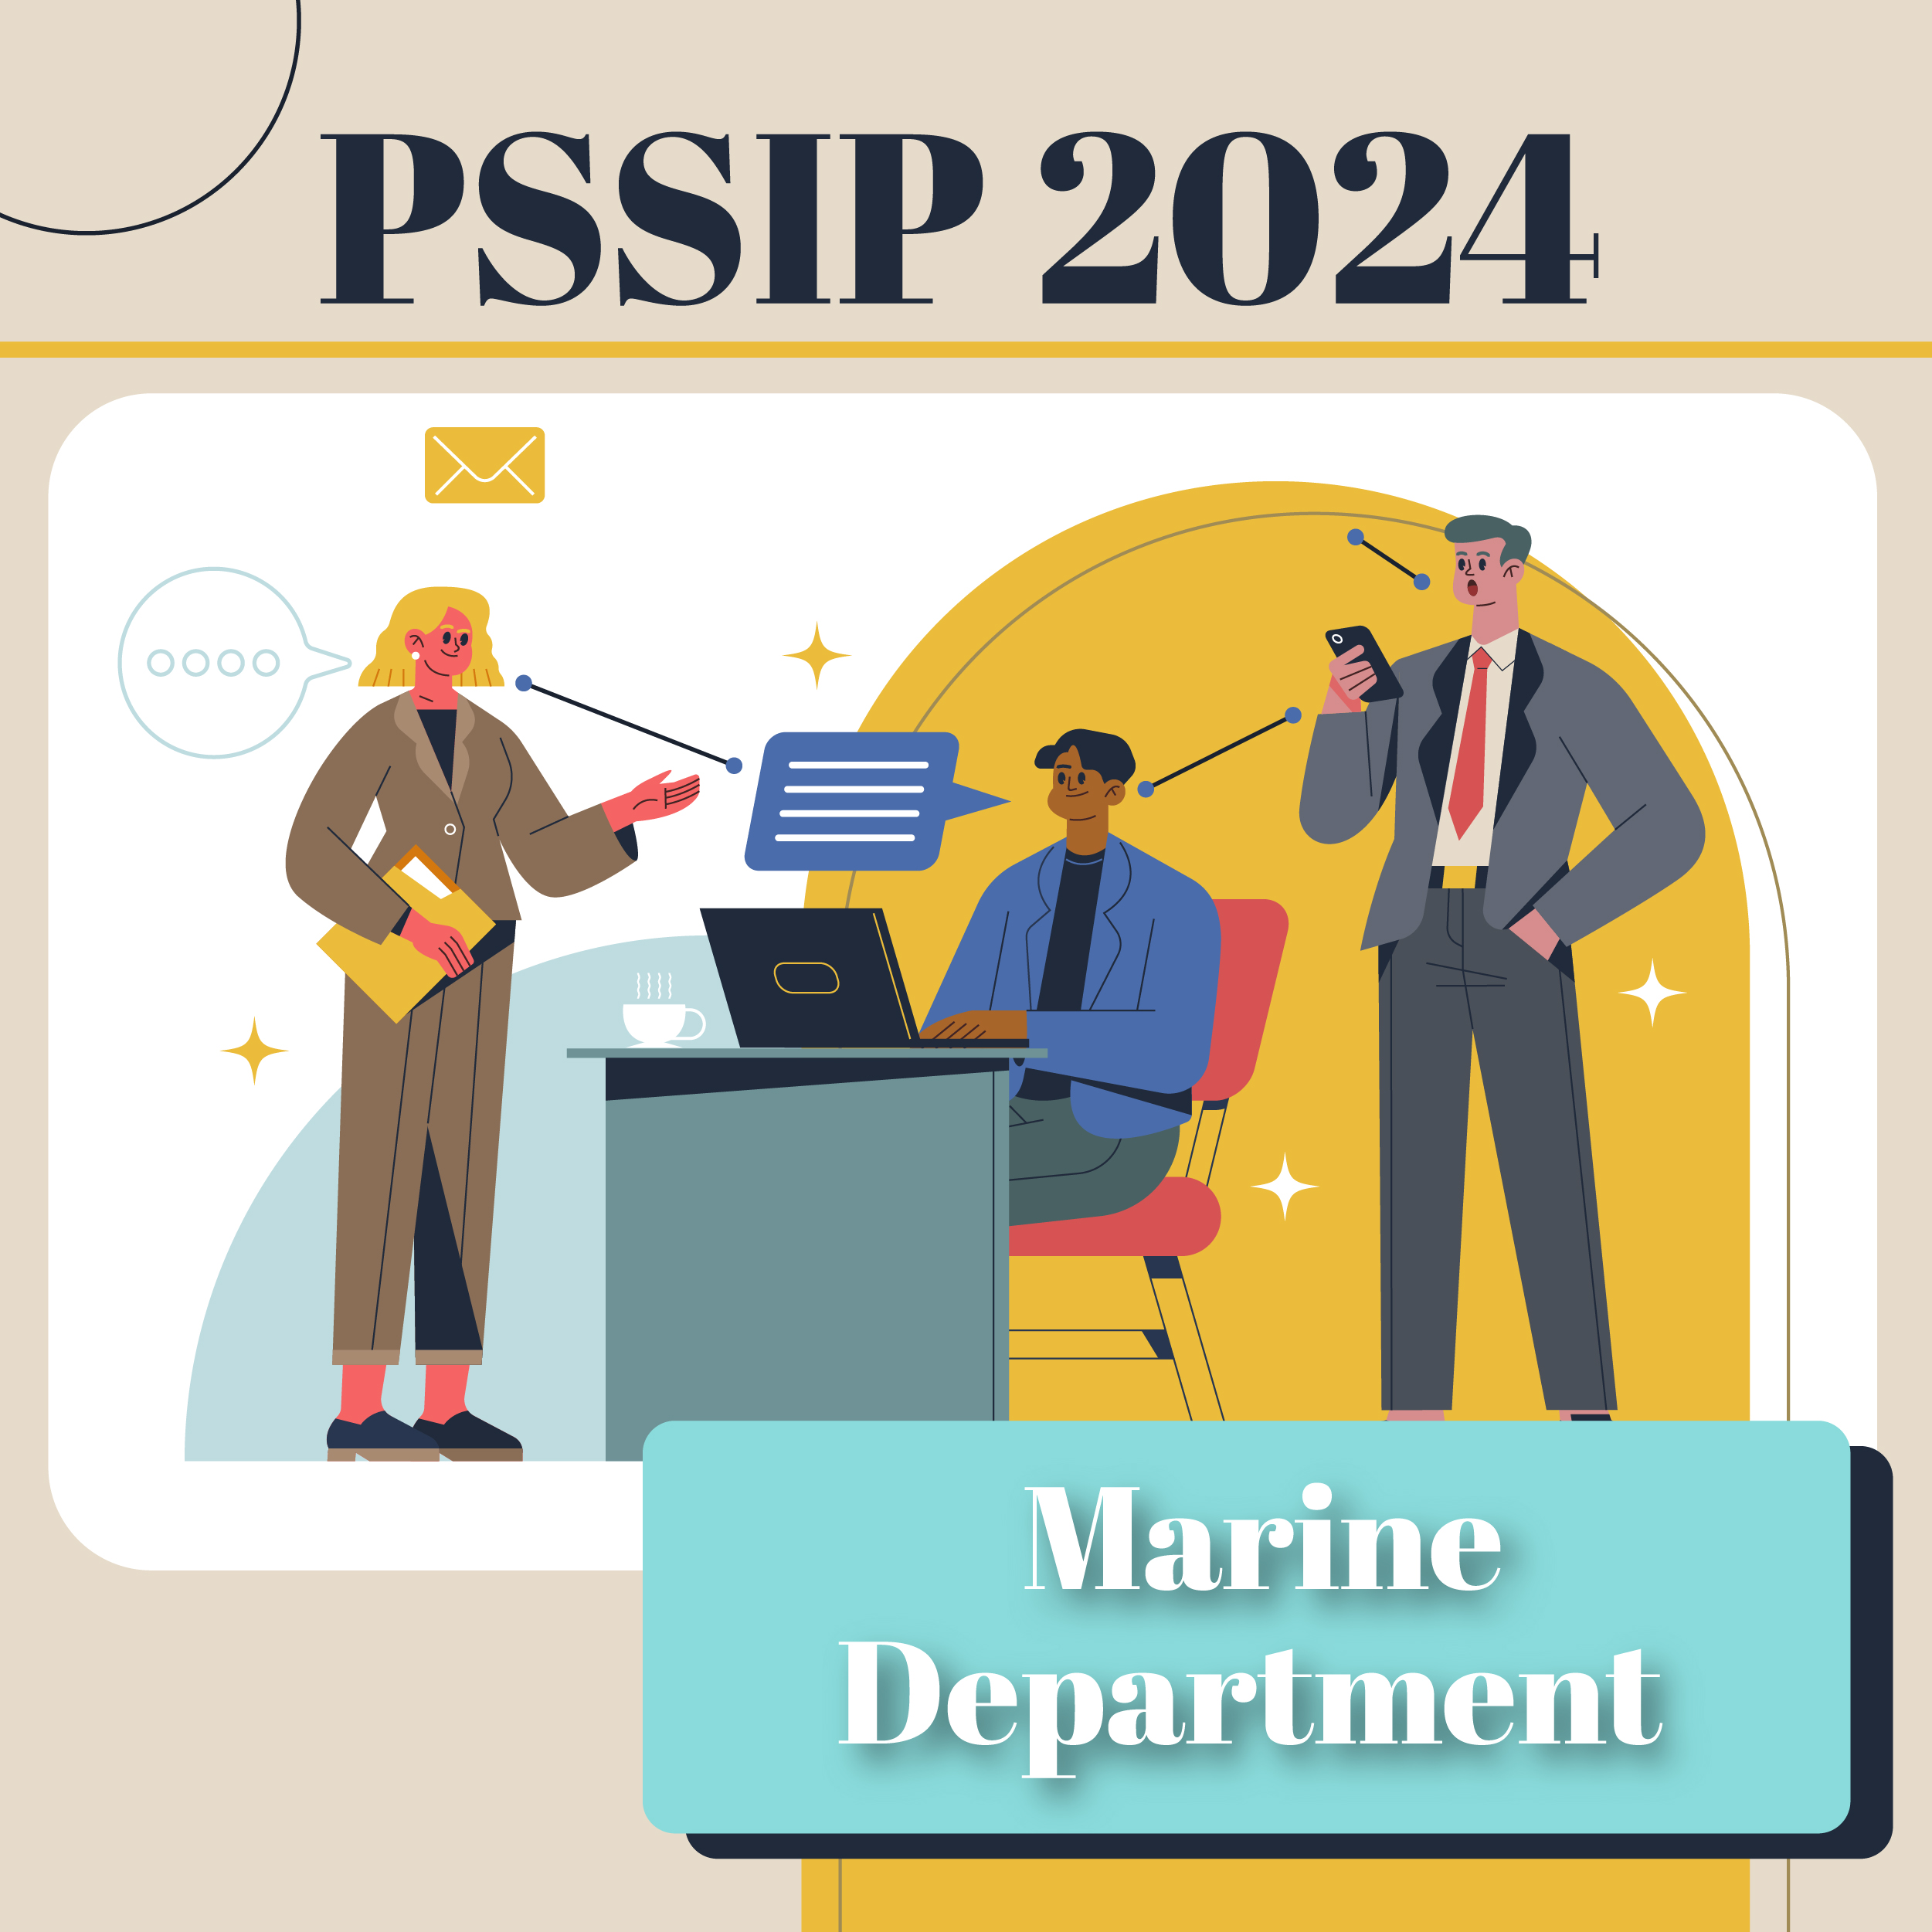 PSSIP2024 – Marine Department